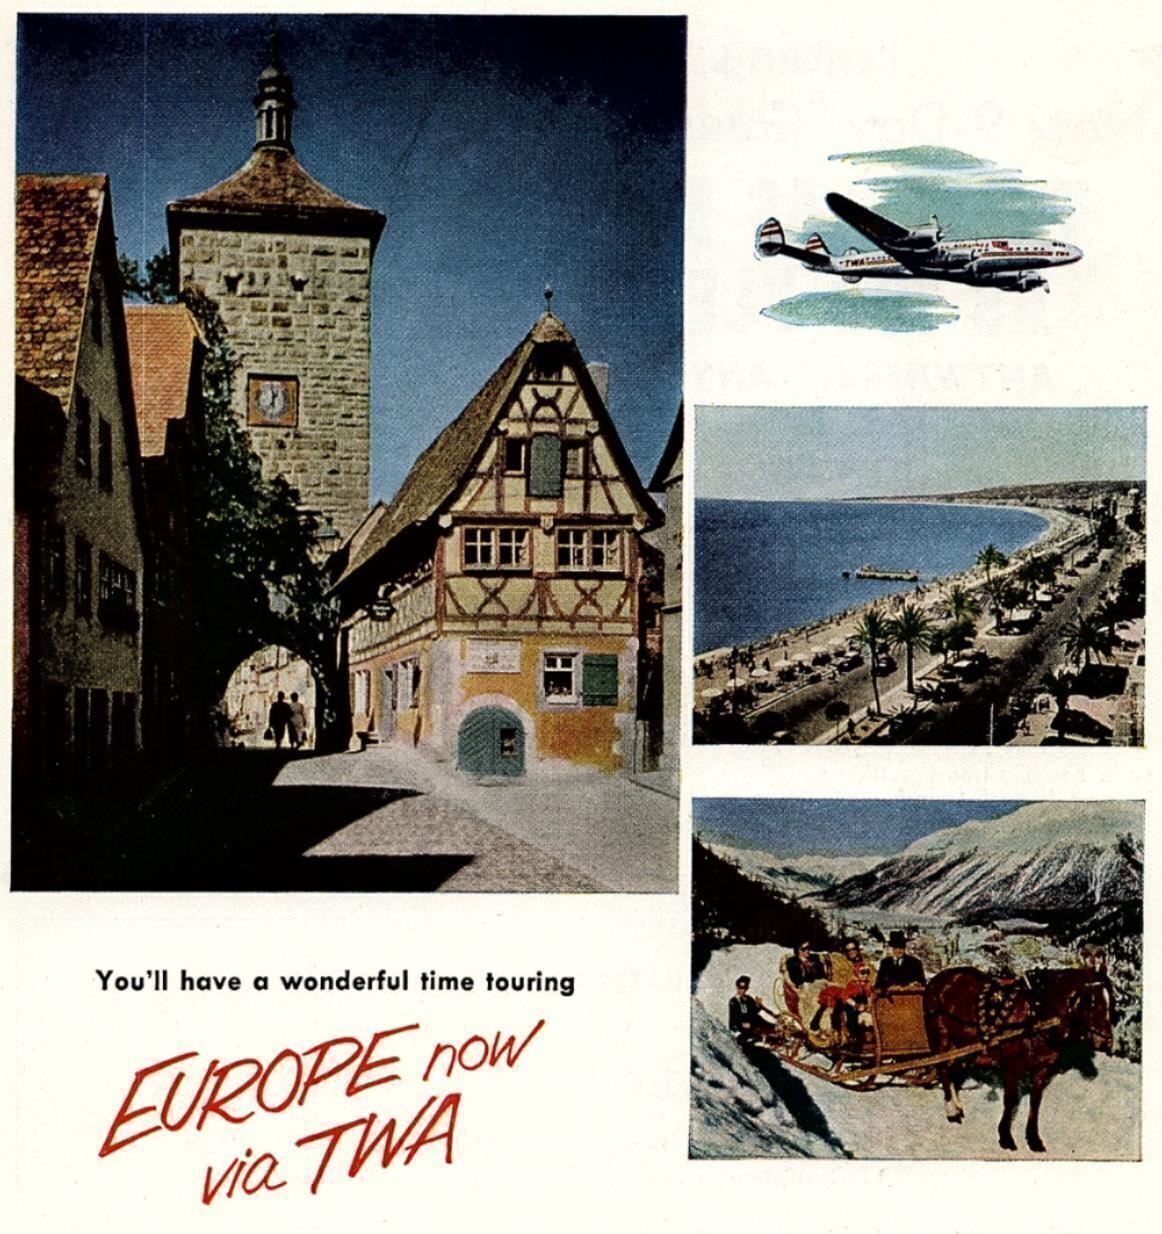 1950s TWA TRANS WORLD AIRLINES TOUR EUROPE NOW VIA TWA MAGAZINE AD 27-34